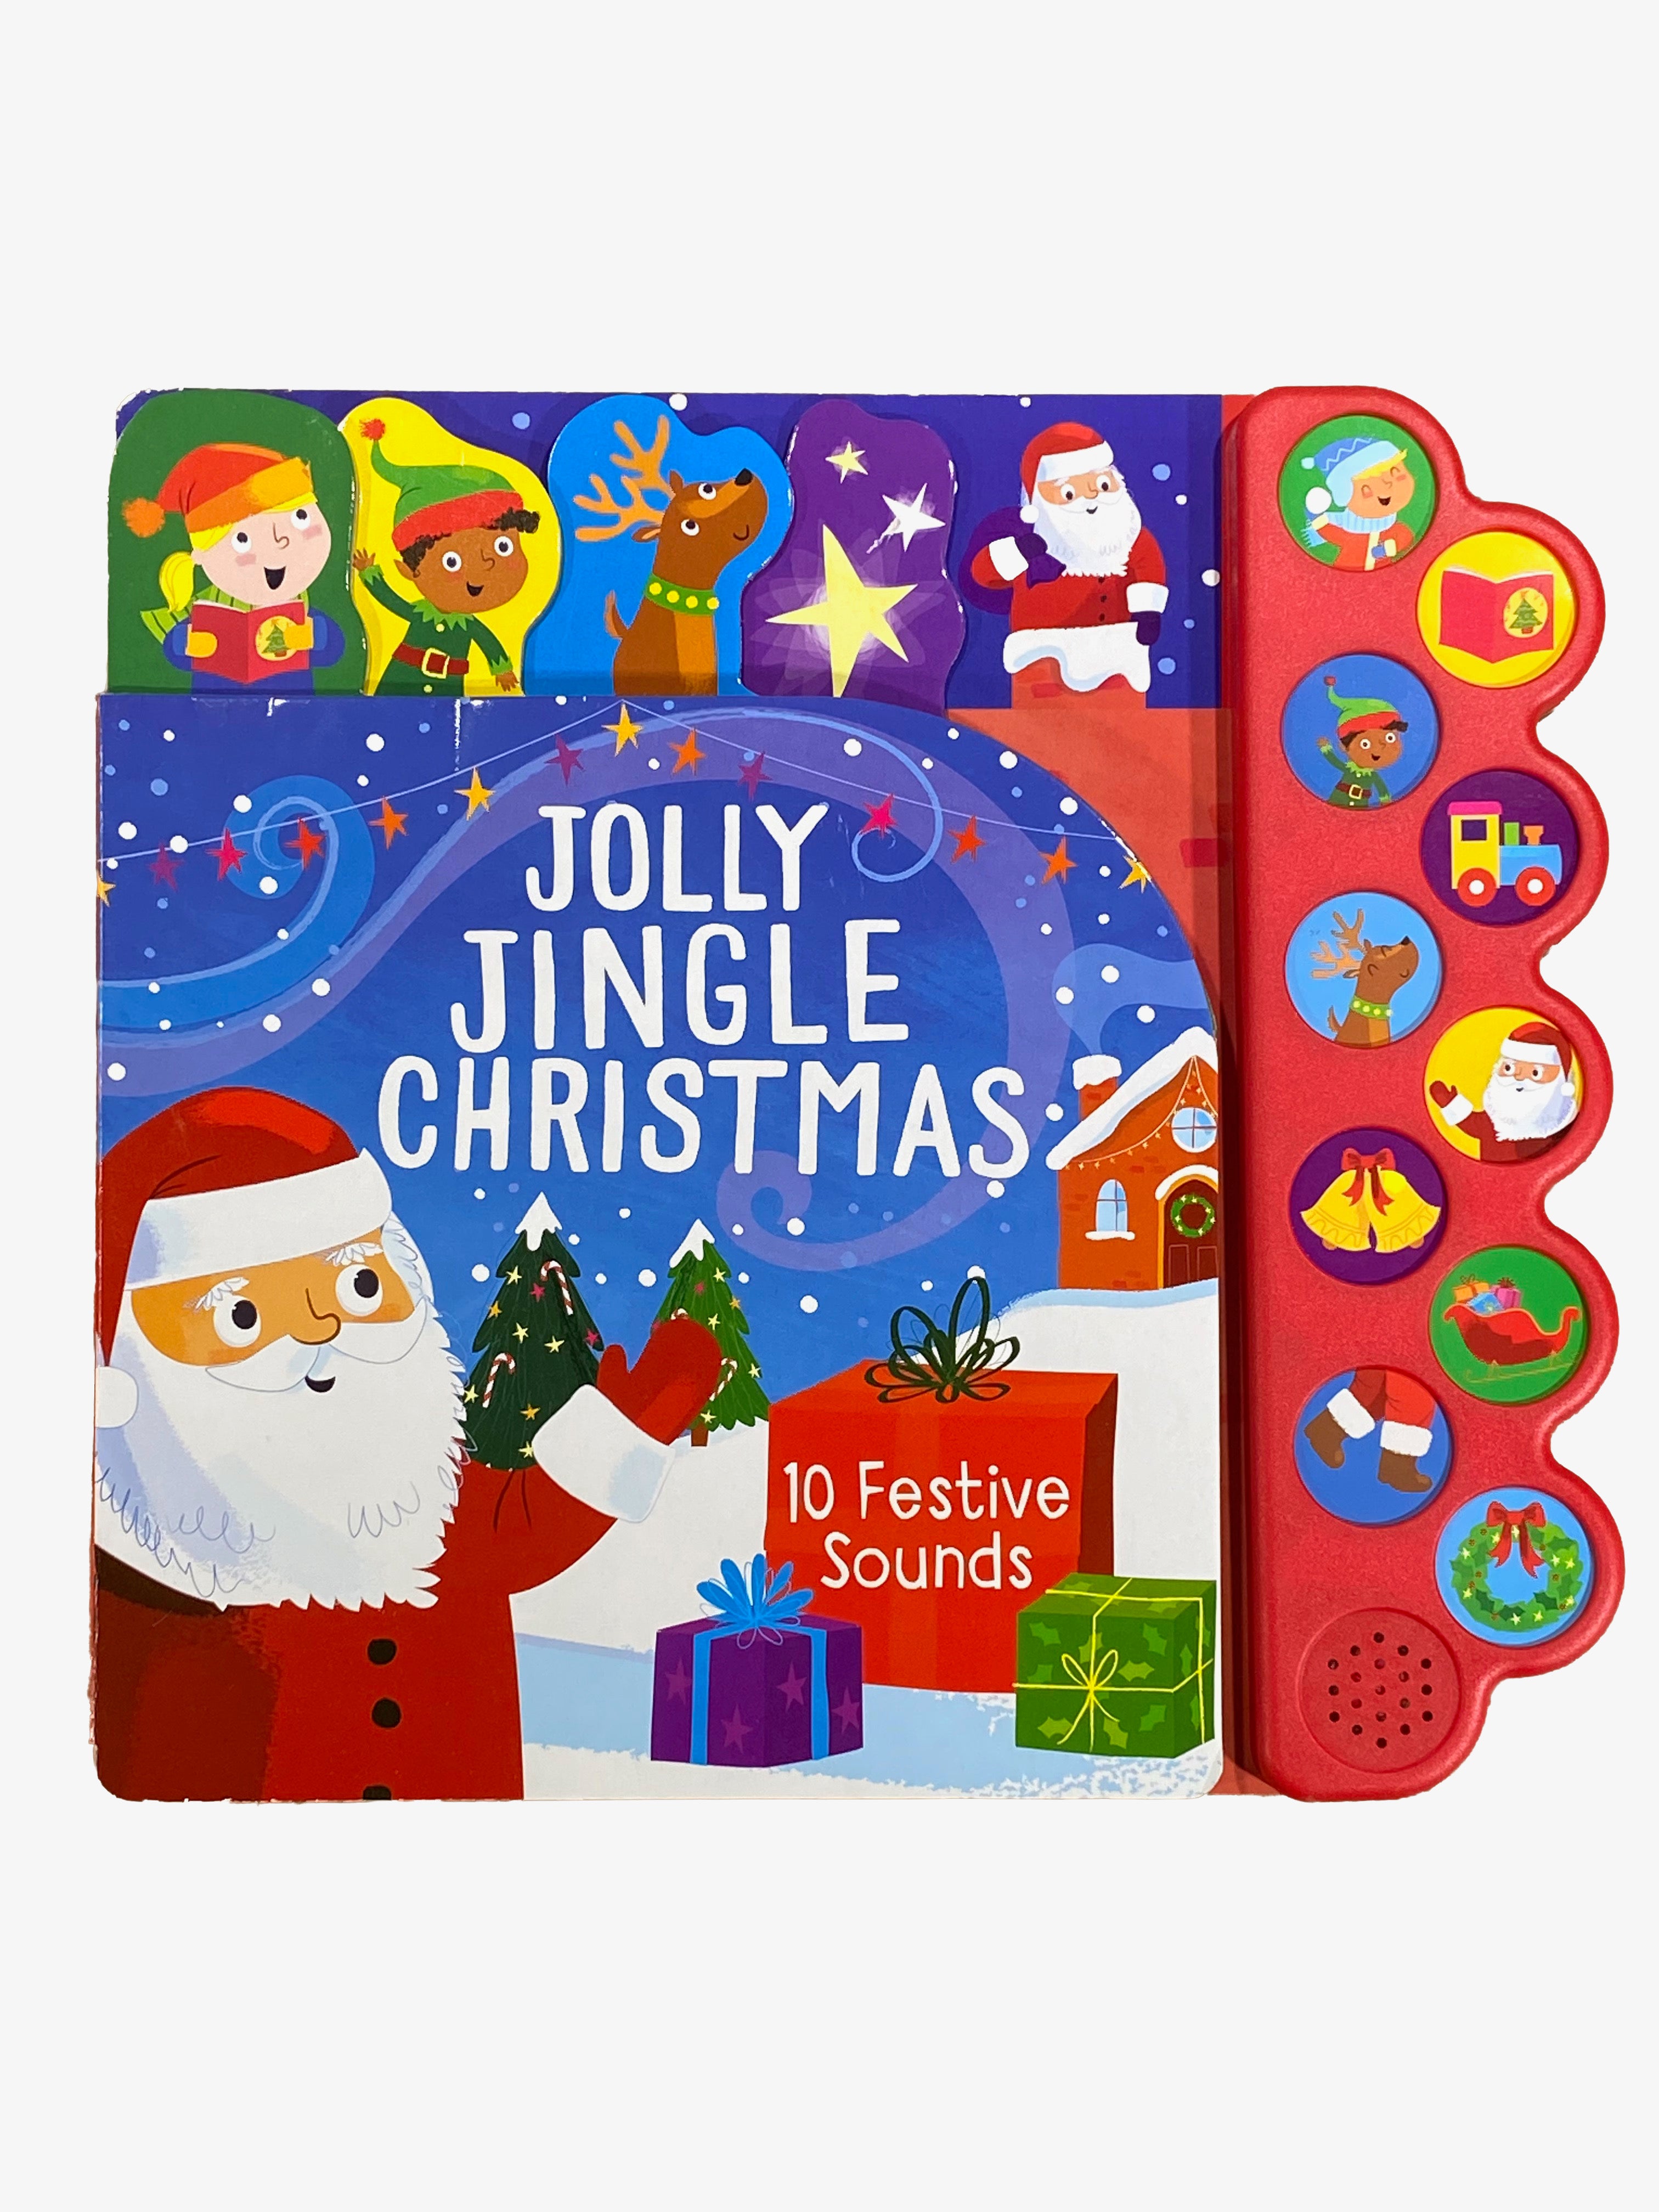 Jolly Jingle Christmas - 10 Festive Sounds    